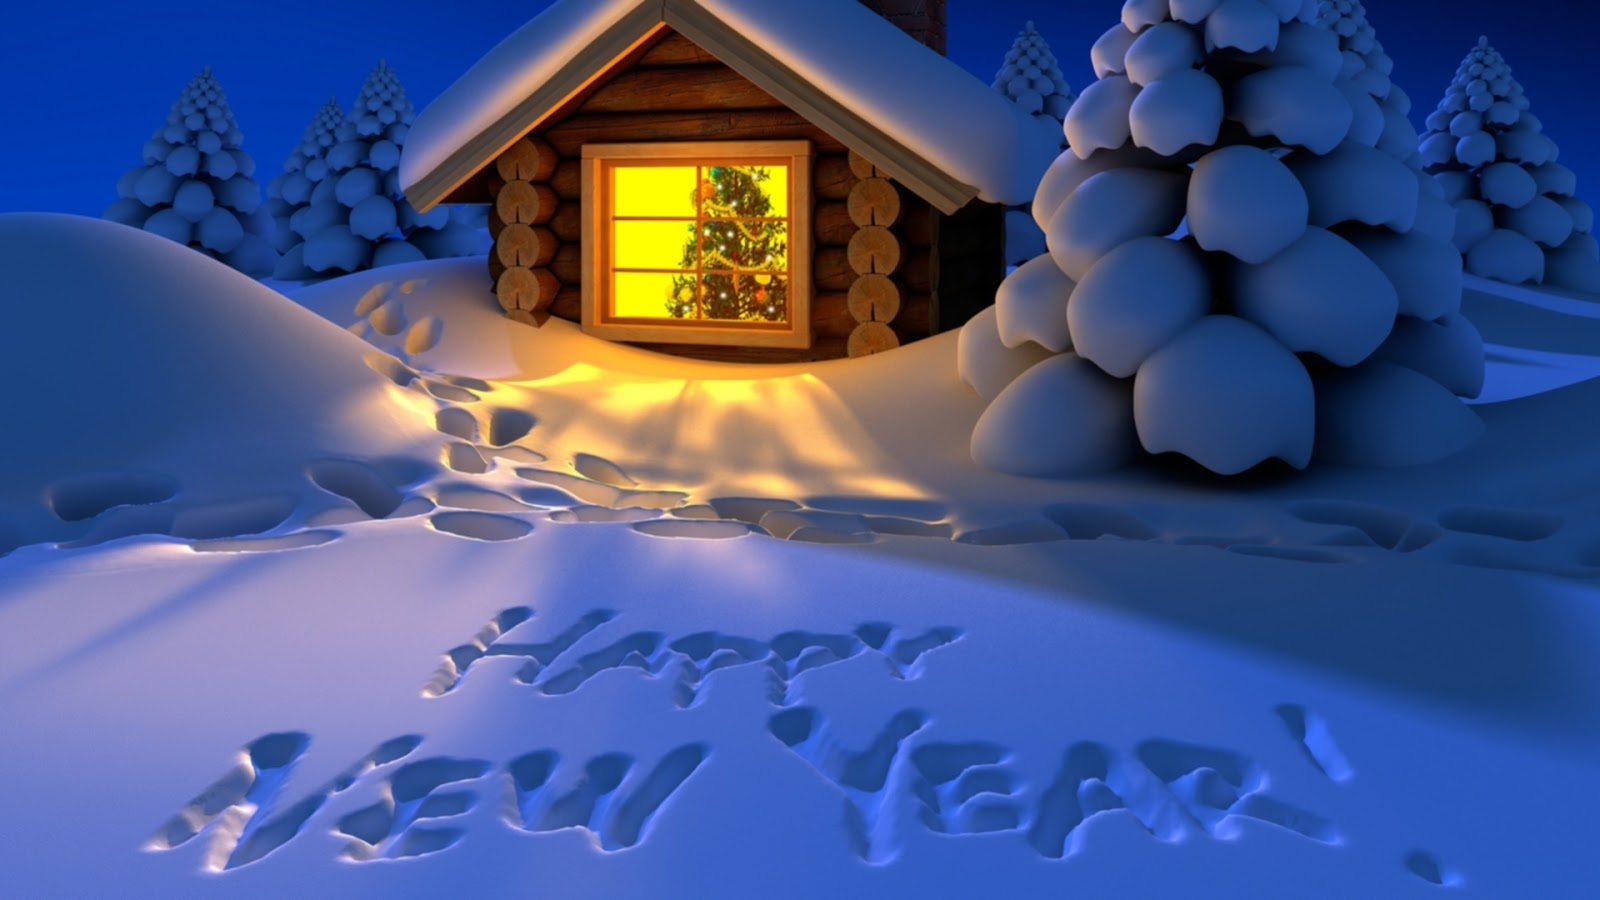 Happy New Year Desktop Wallpaper Baltana